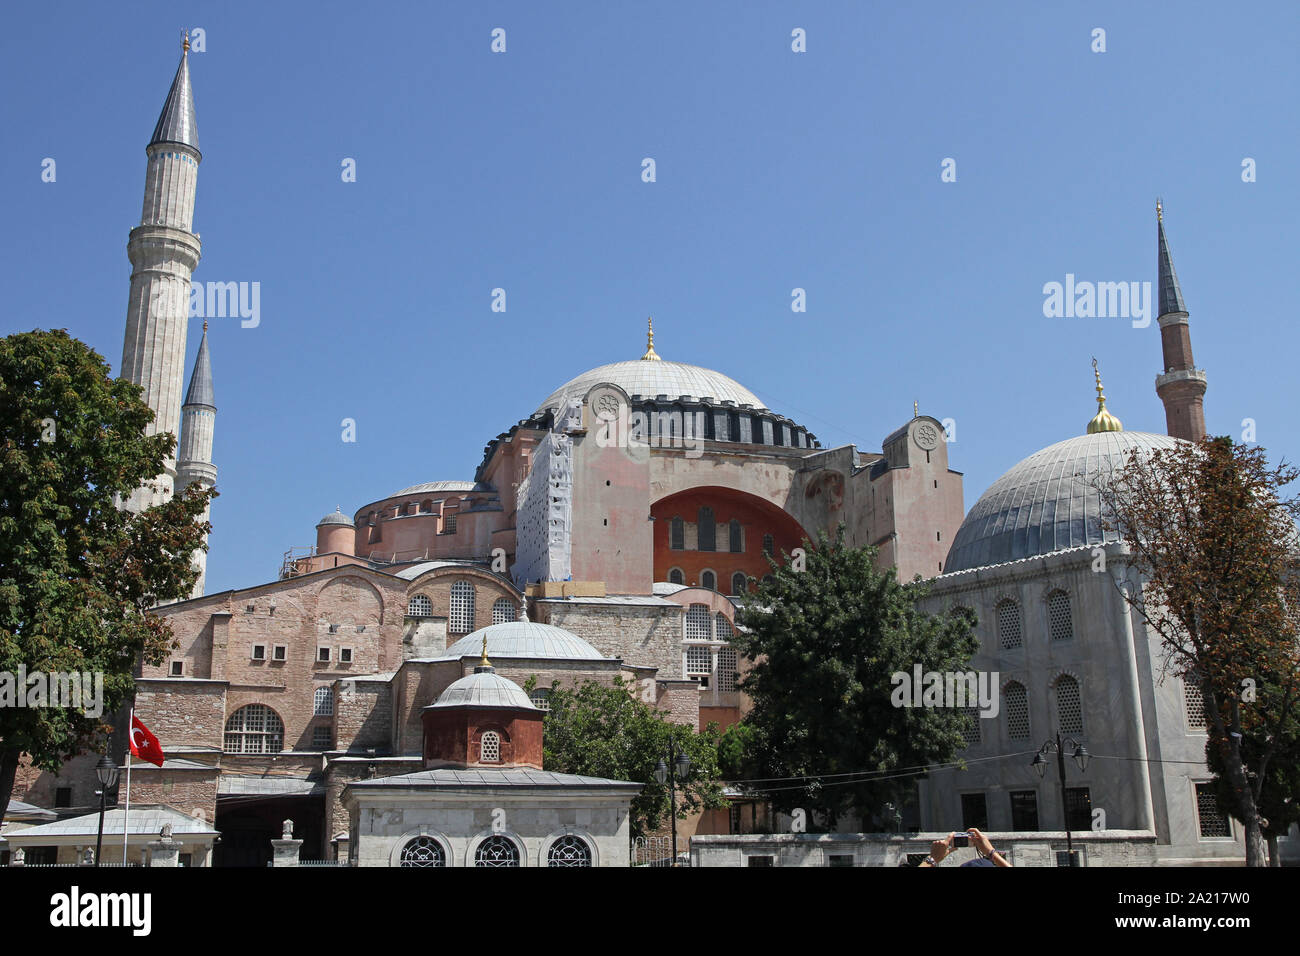 Ayasofya AKA Hagia Sophia Museum, Fatih, Istanbul, Turkey. Stock Photo